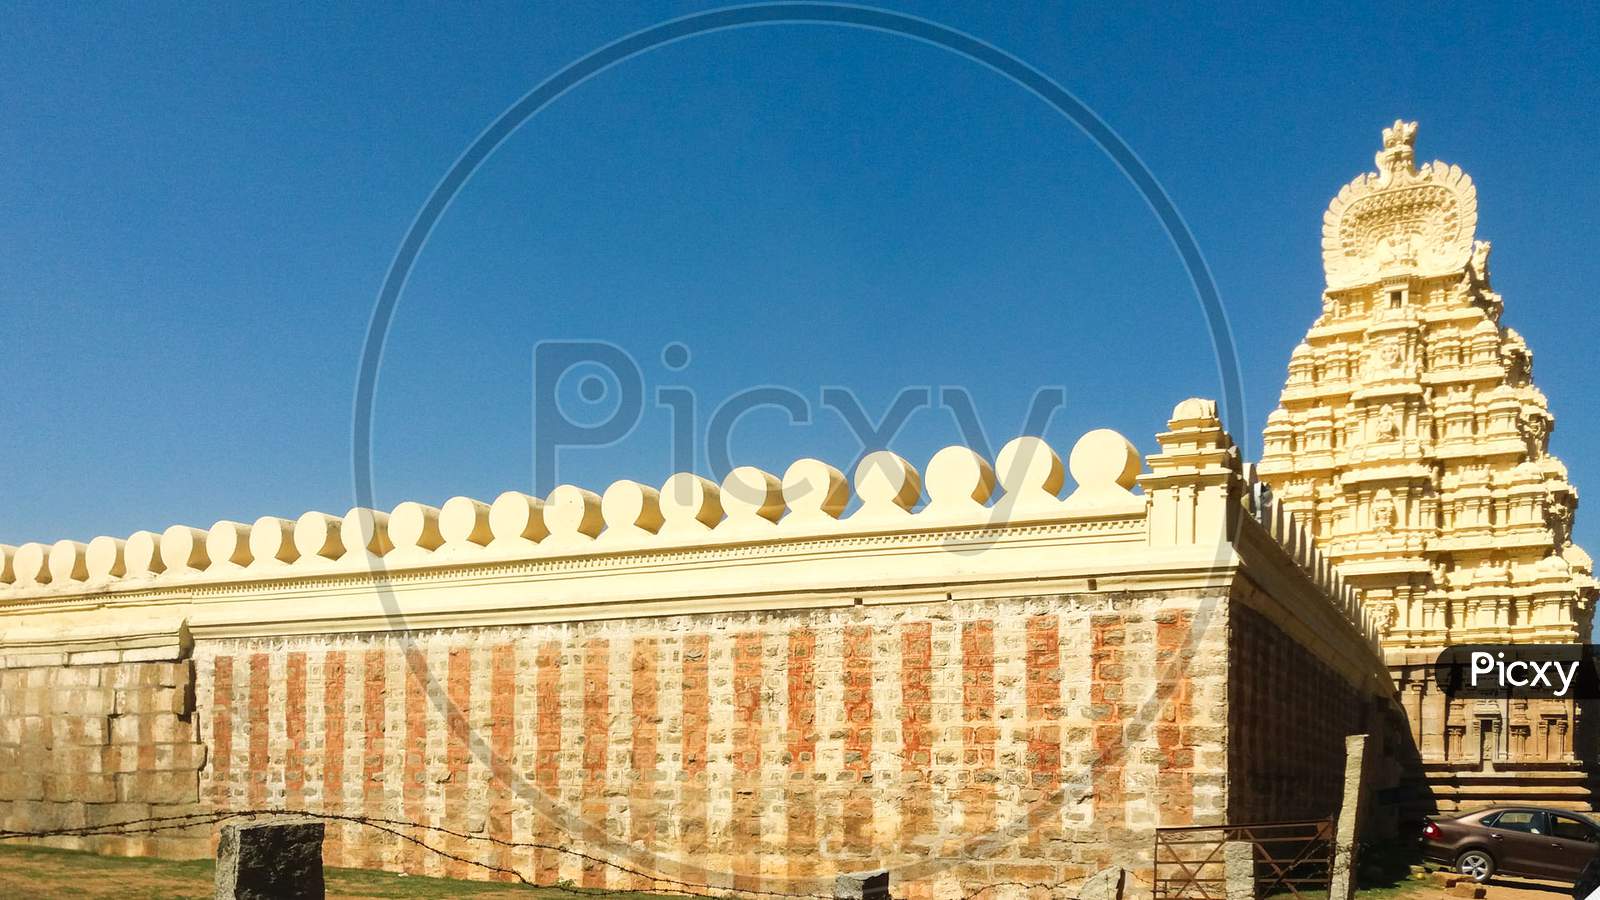 Outer wall of ranganathaswamy temple,Srirangam